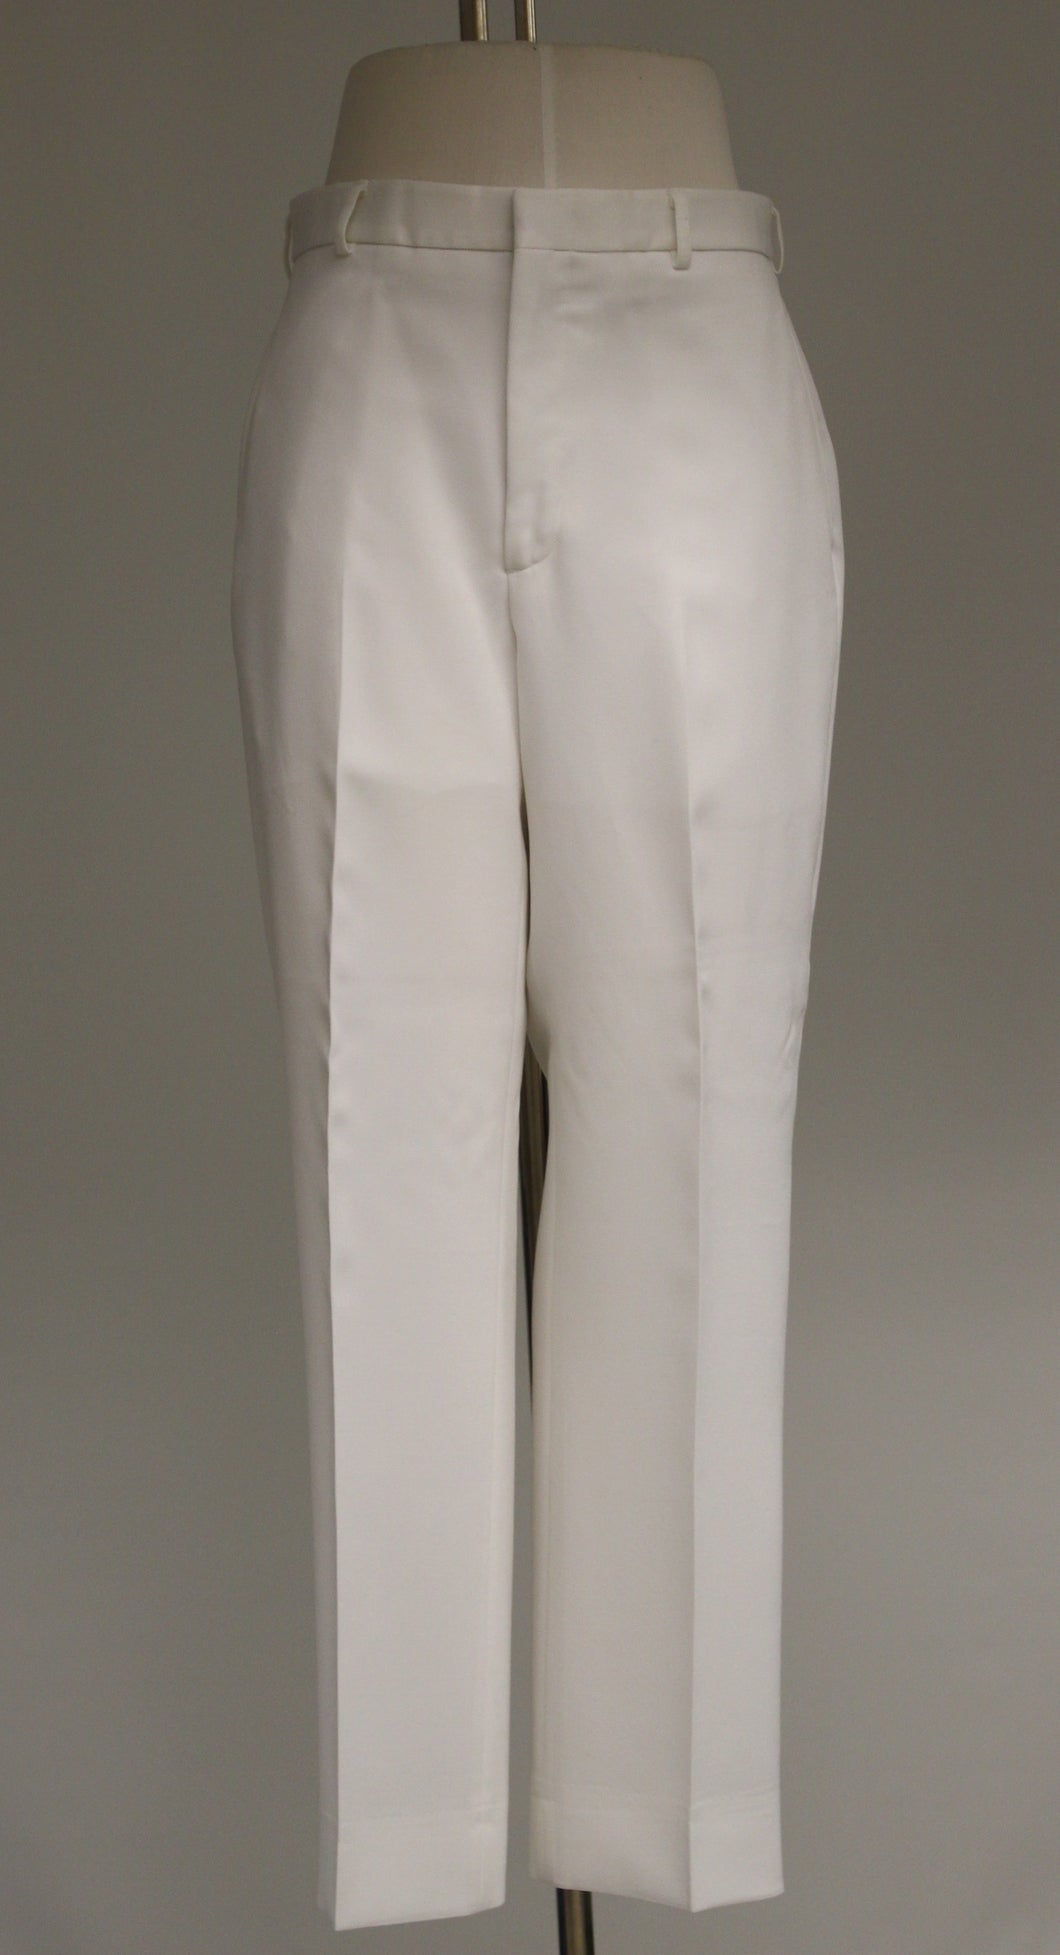 USN Navy White Men's Enlisted Bell Bottom Dress Trousers - Size: 37 Long - Used